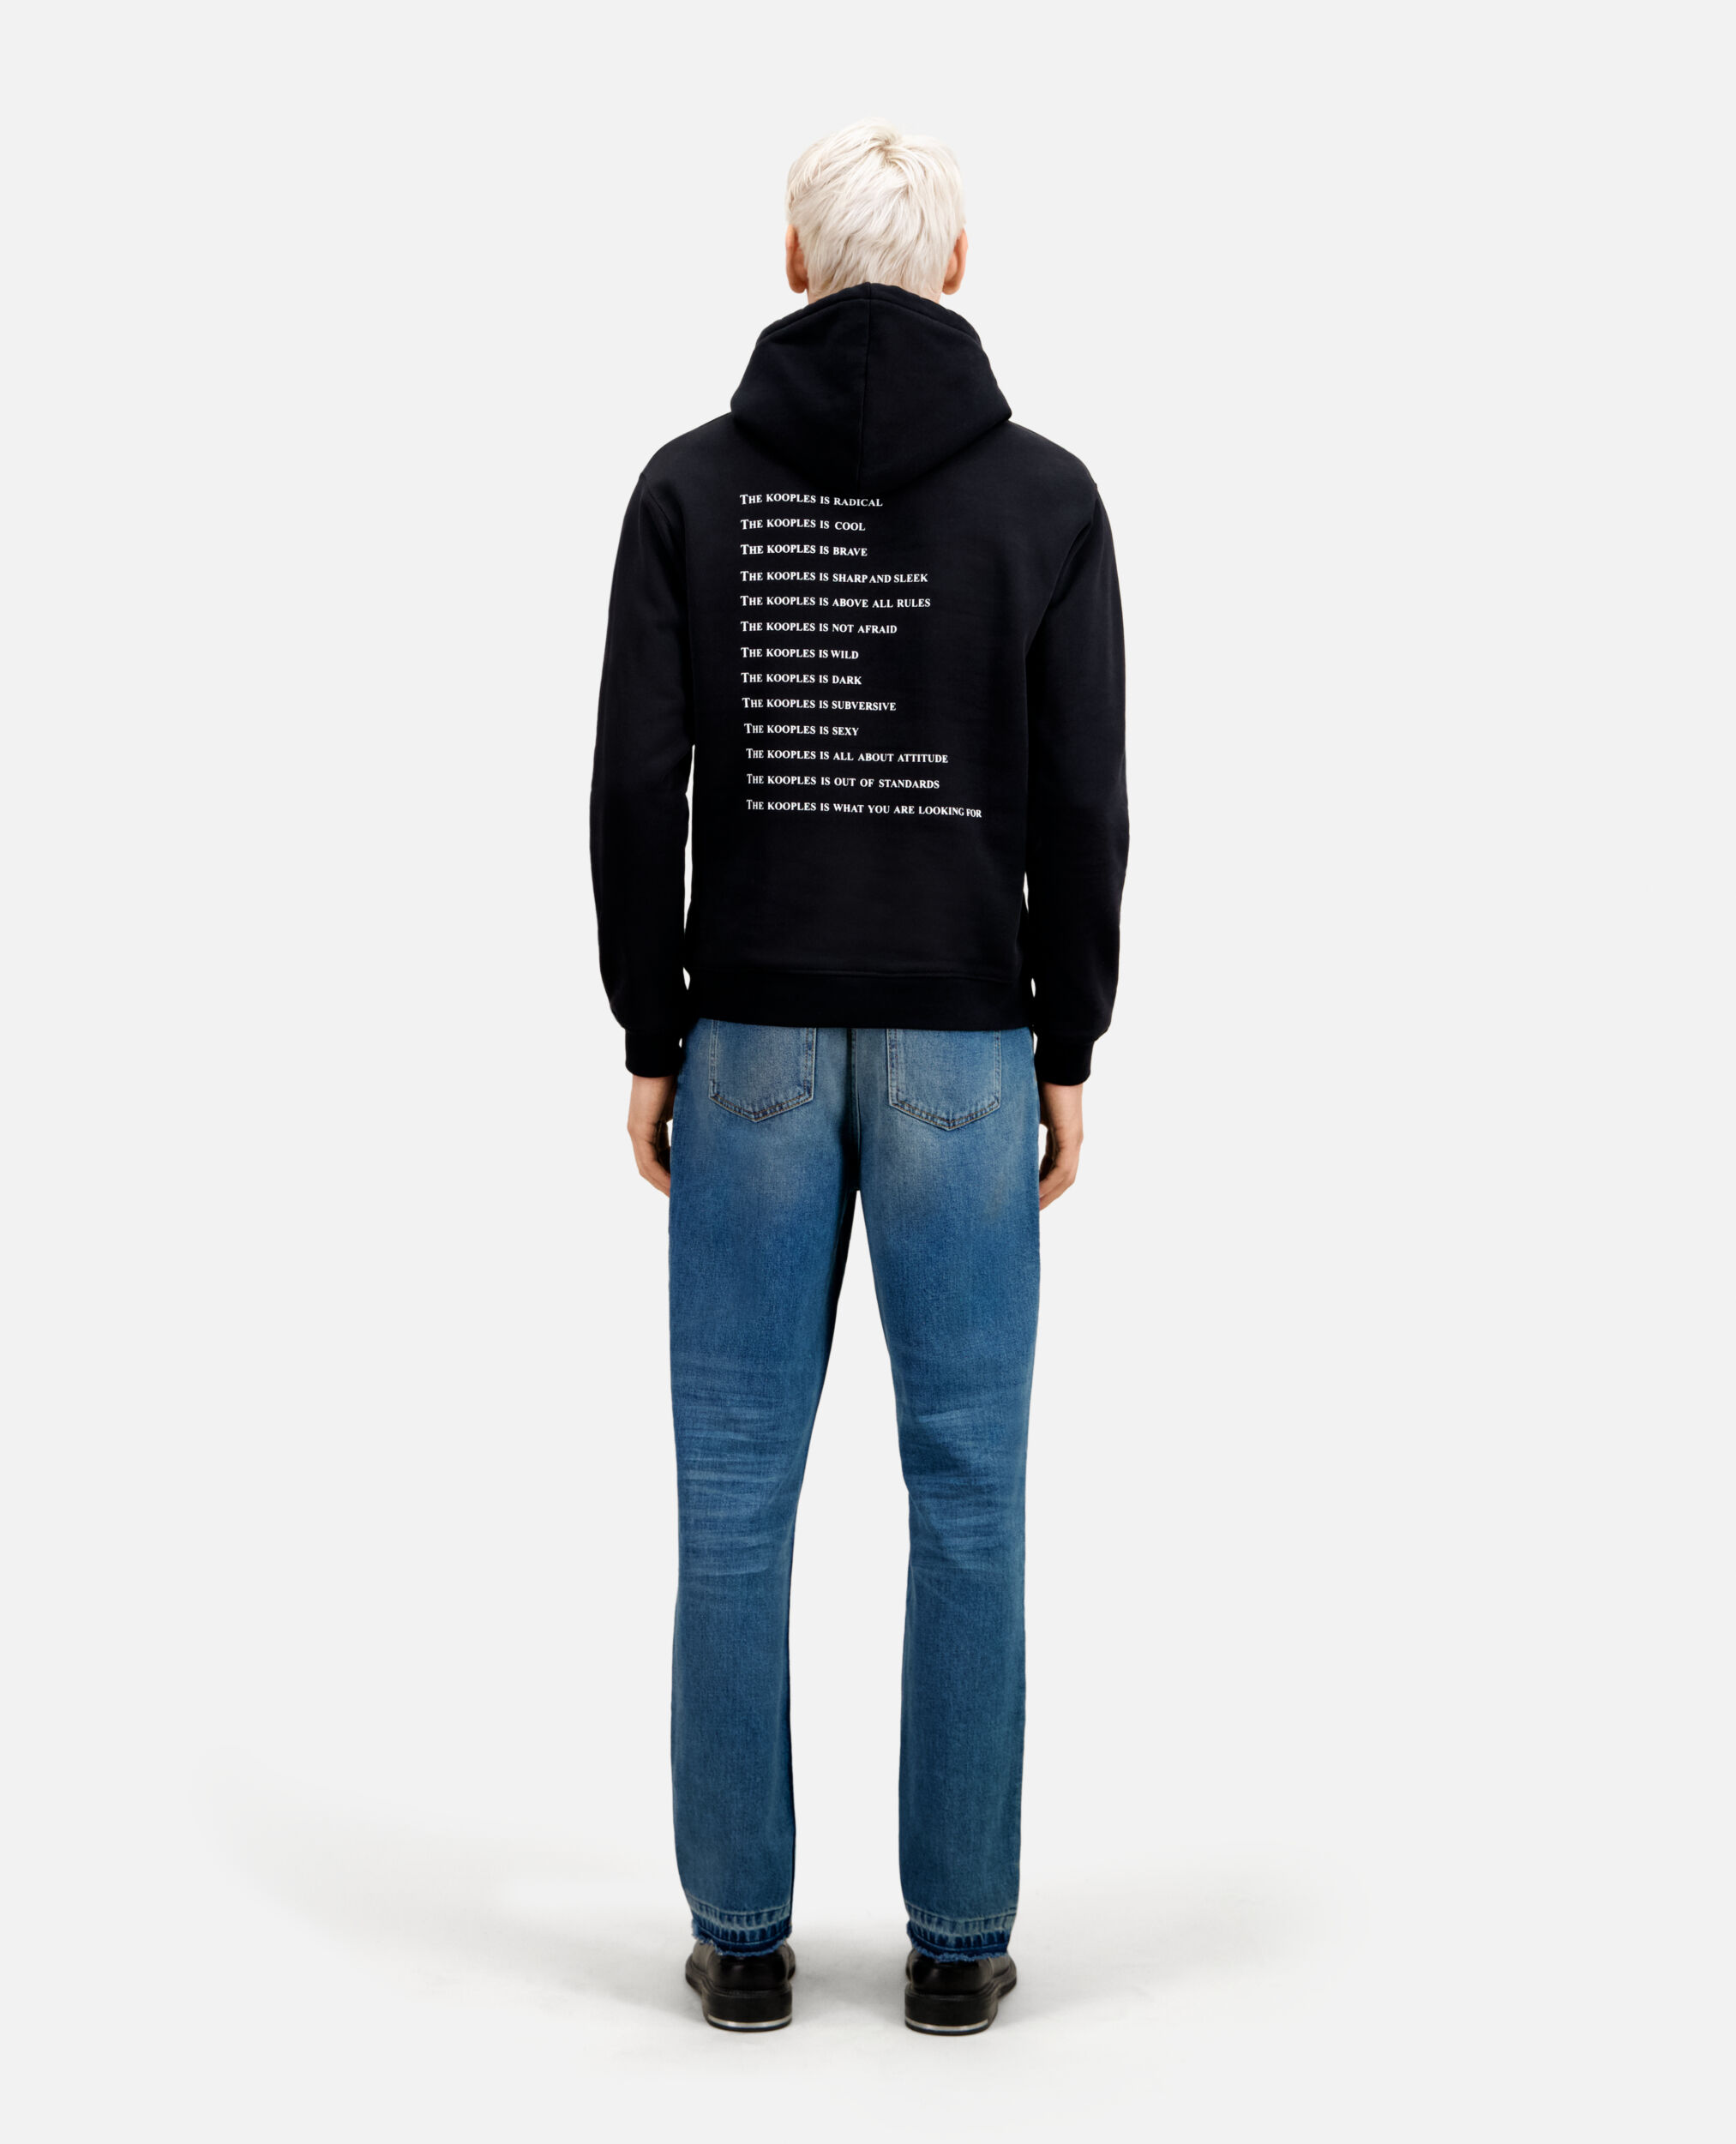 Black sweatshirt with What is screen print, BLACK, hi-res image number null